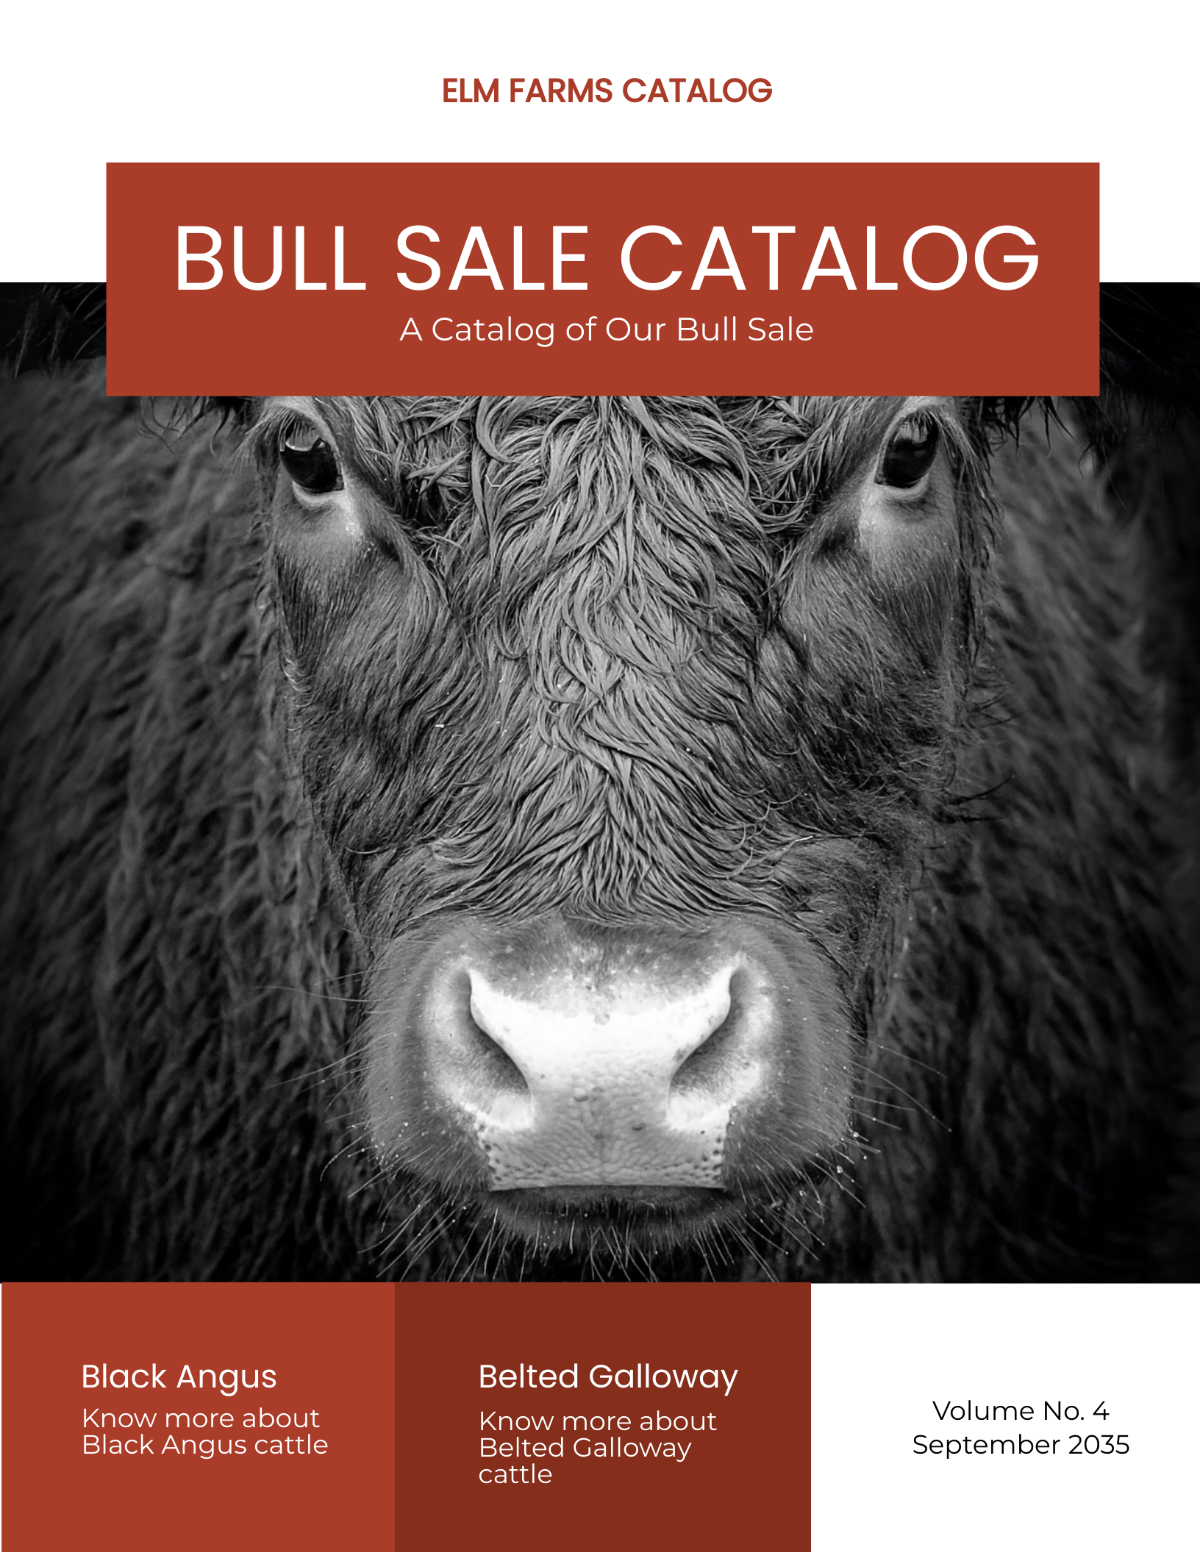 Bull Sale Catalog Template